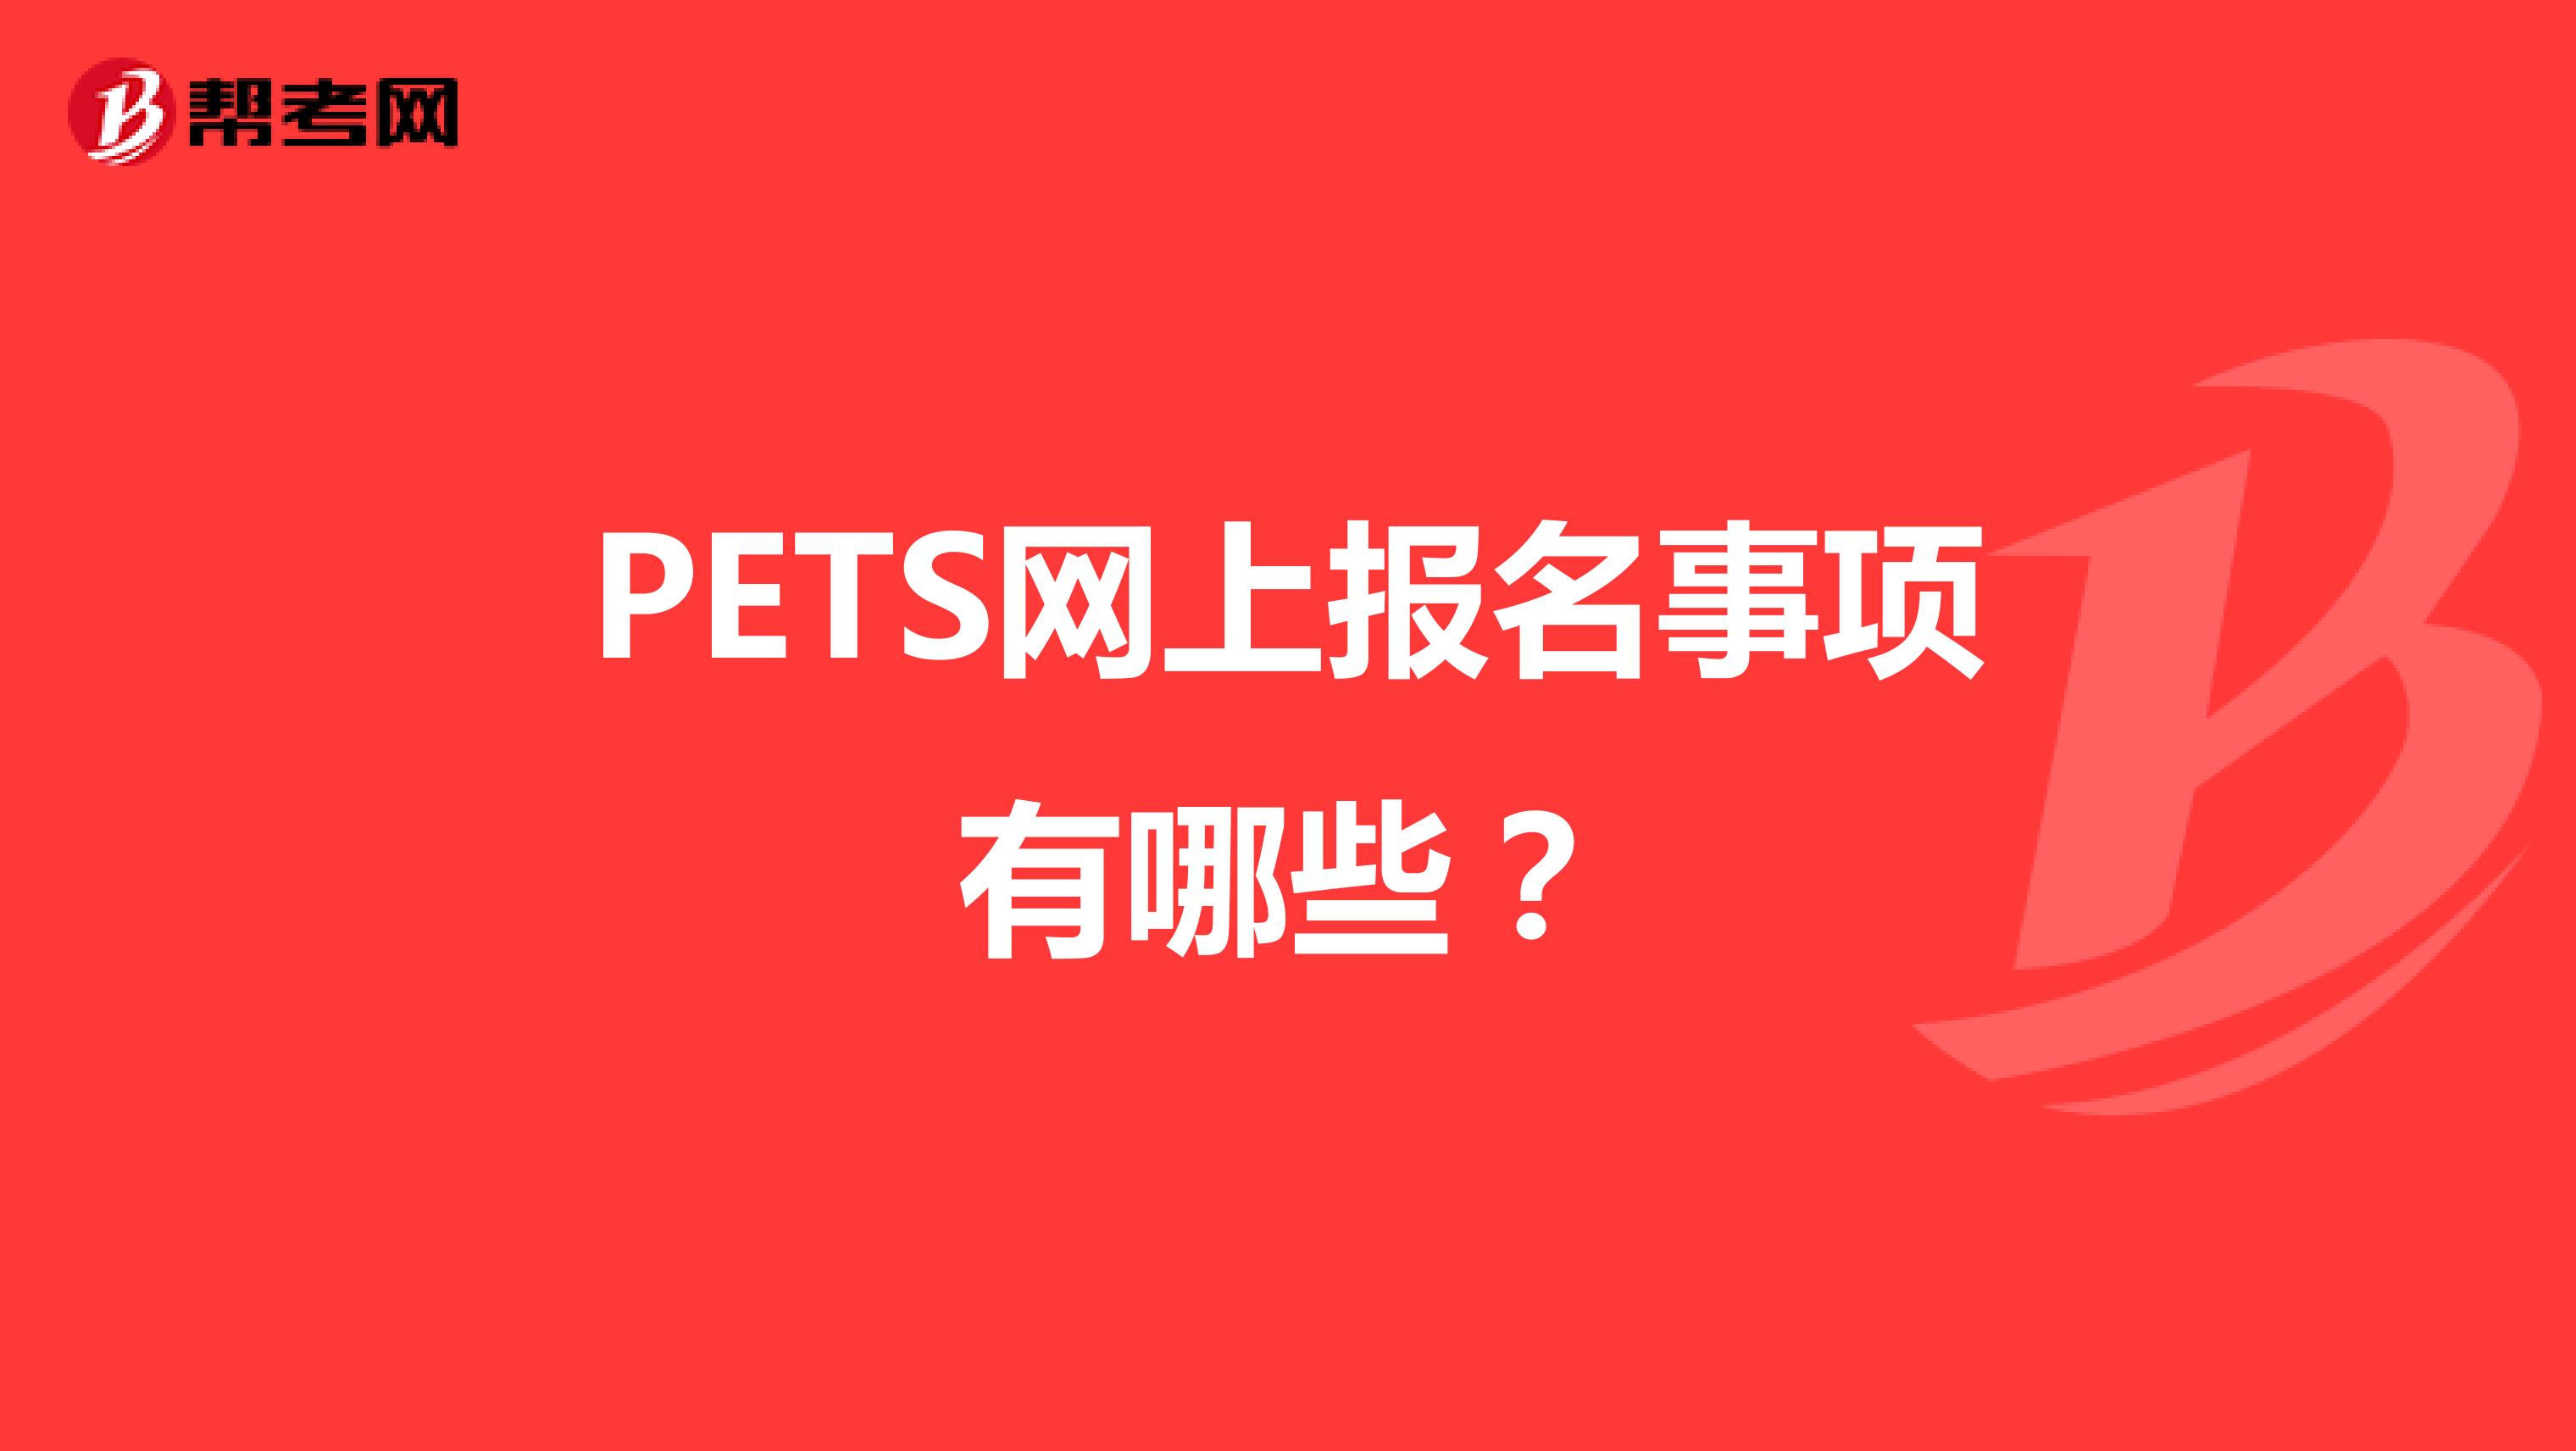 PETS网上报名事项有哪些？